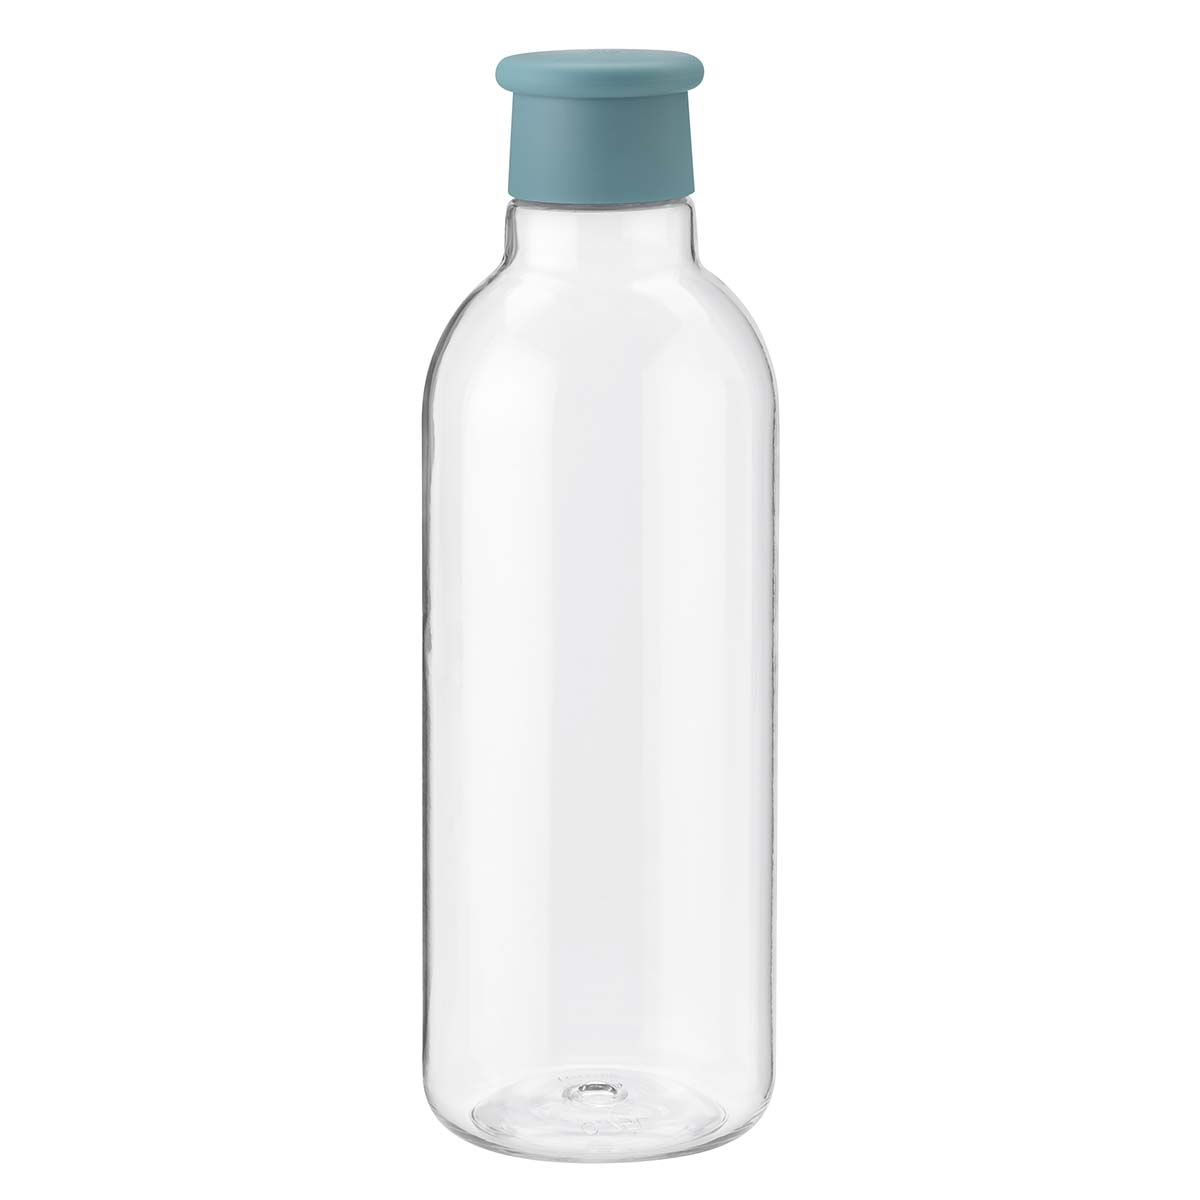 DRINK-IT Vandflaske, 0.75 l., aqua